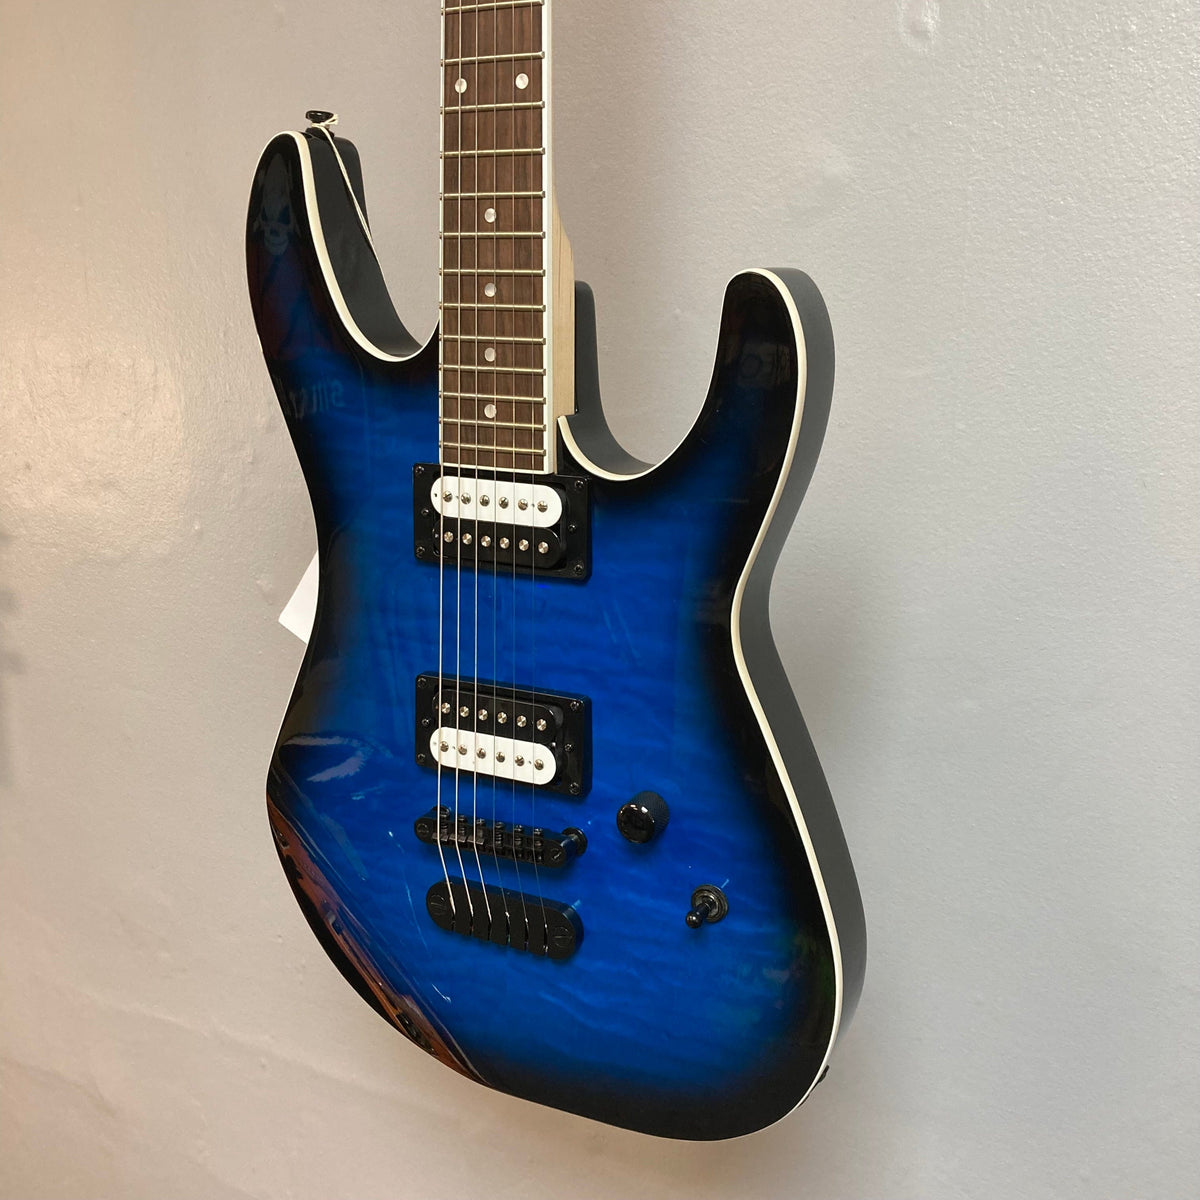 Dean MD X Quilt Maple Trans Blue Burst Guitars on Main